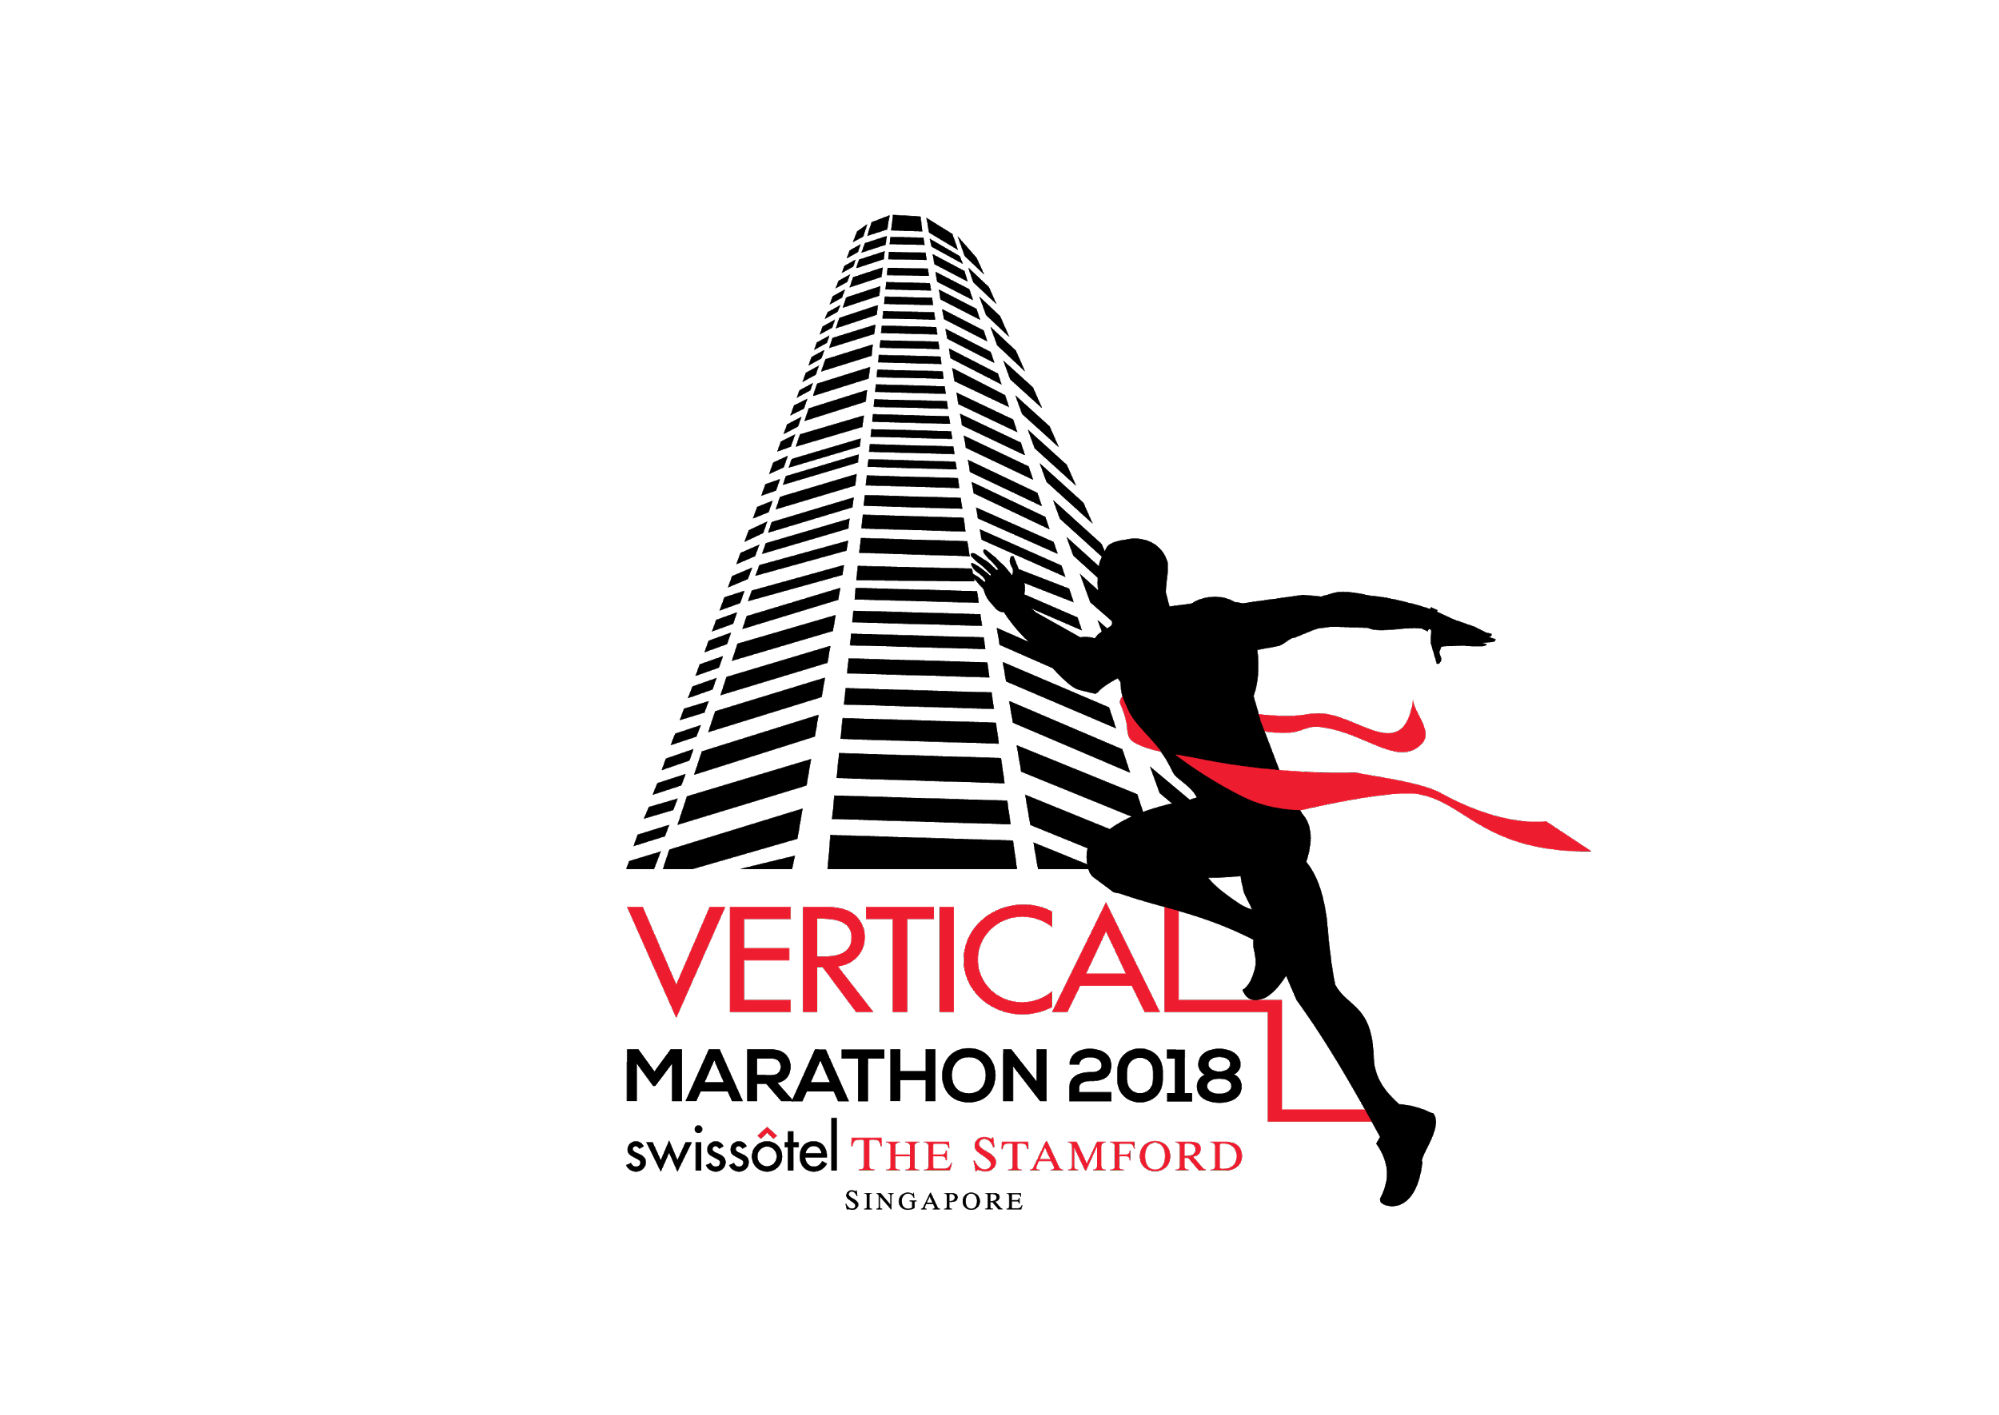 vertical marathon swissotel the stamford 2018 - finish line logo singapore